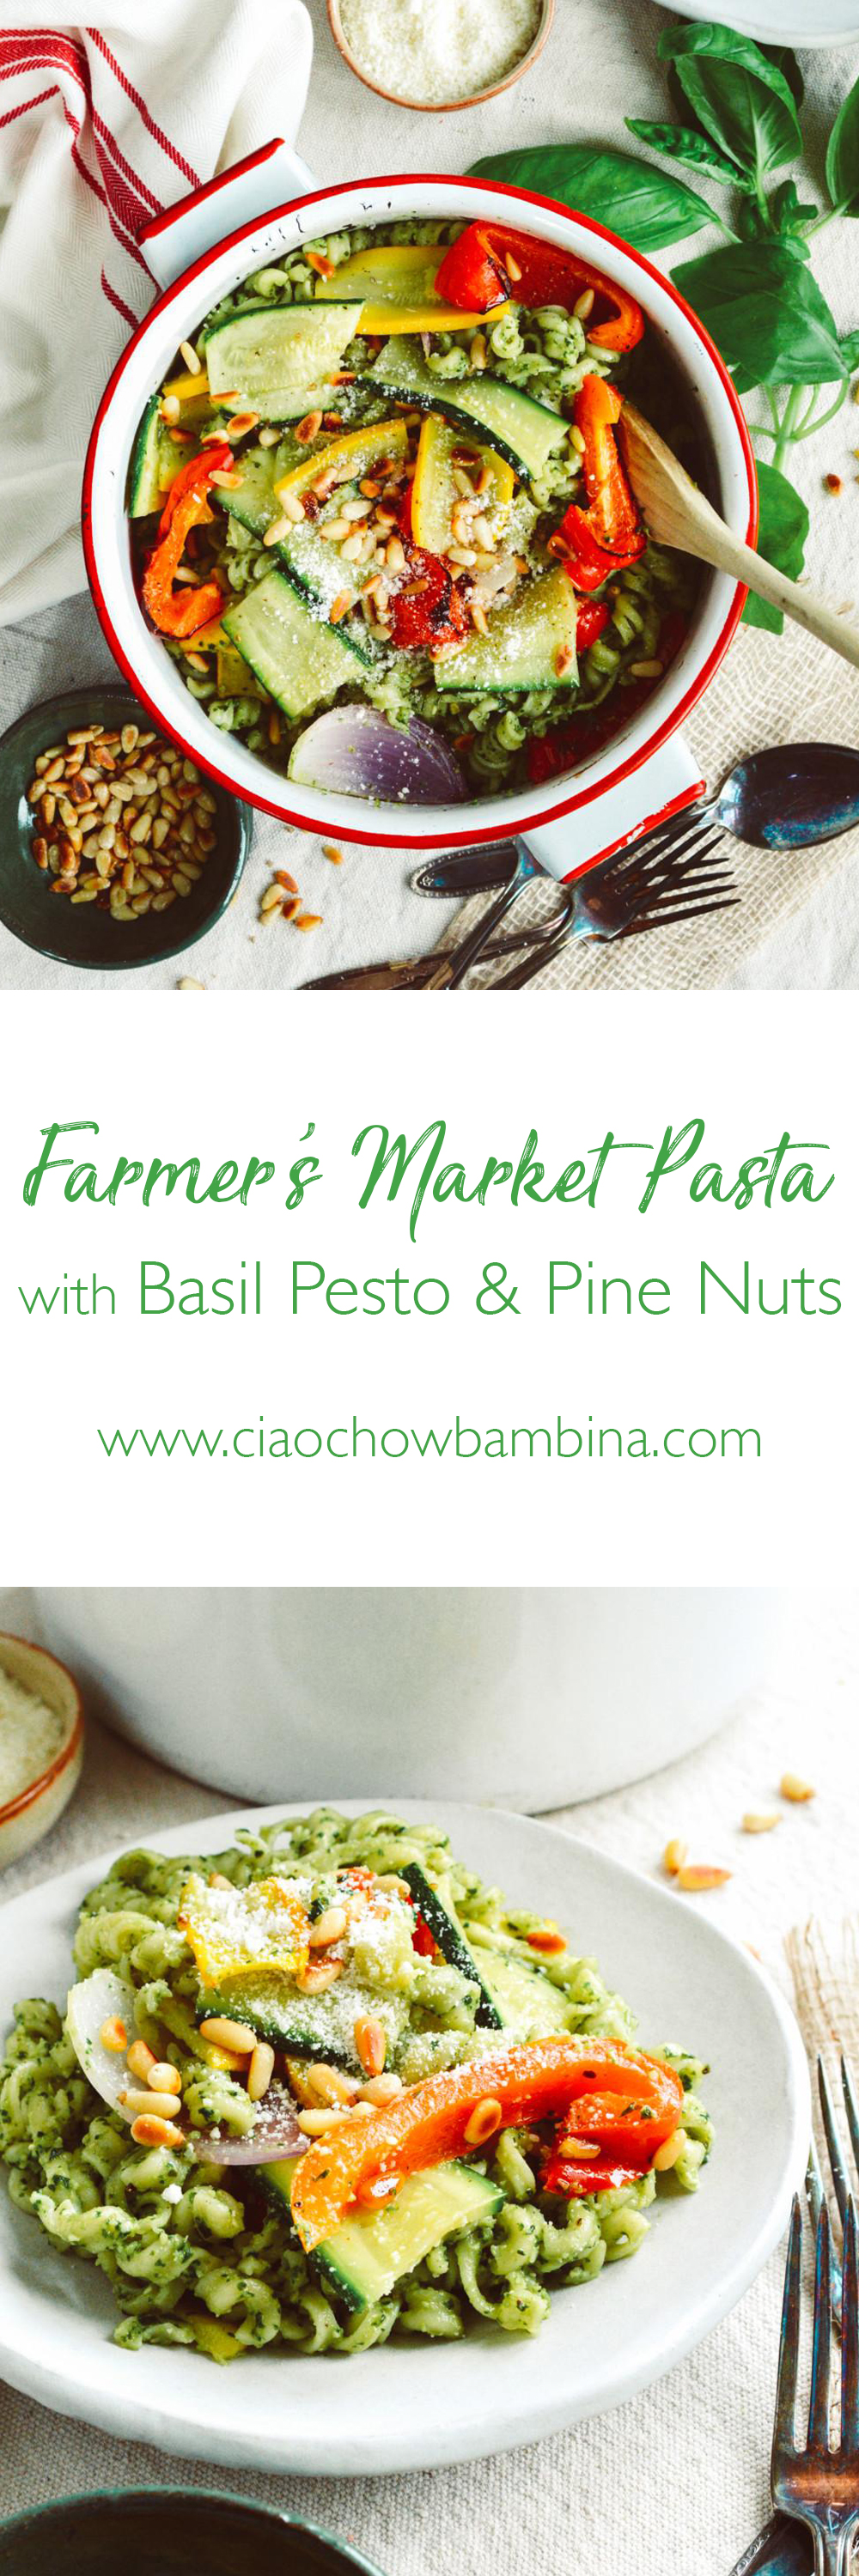 Farmers' Market Pasta with Basil Pesto and Pine Nuts ciaochowbambina.com